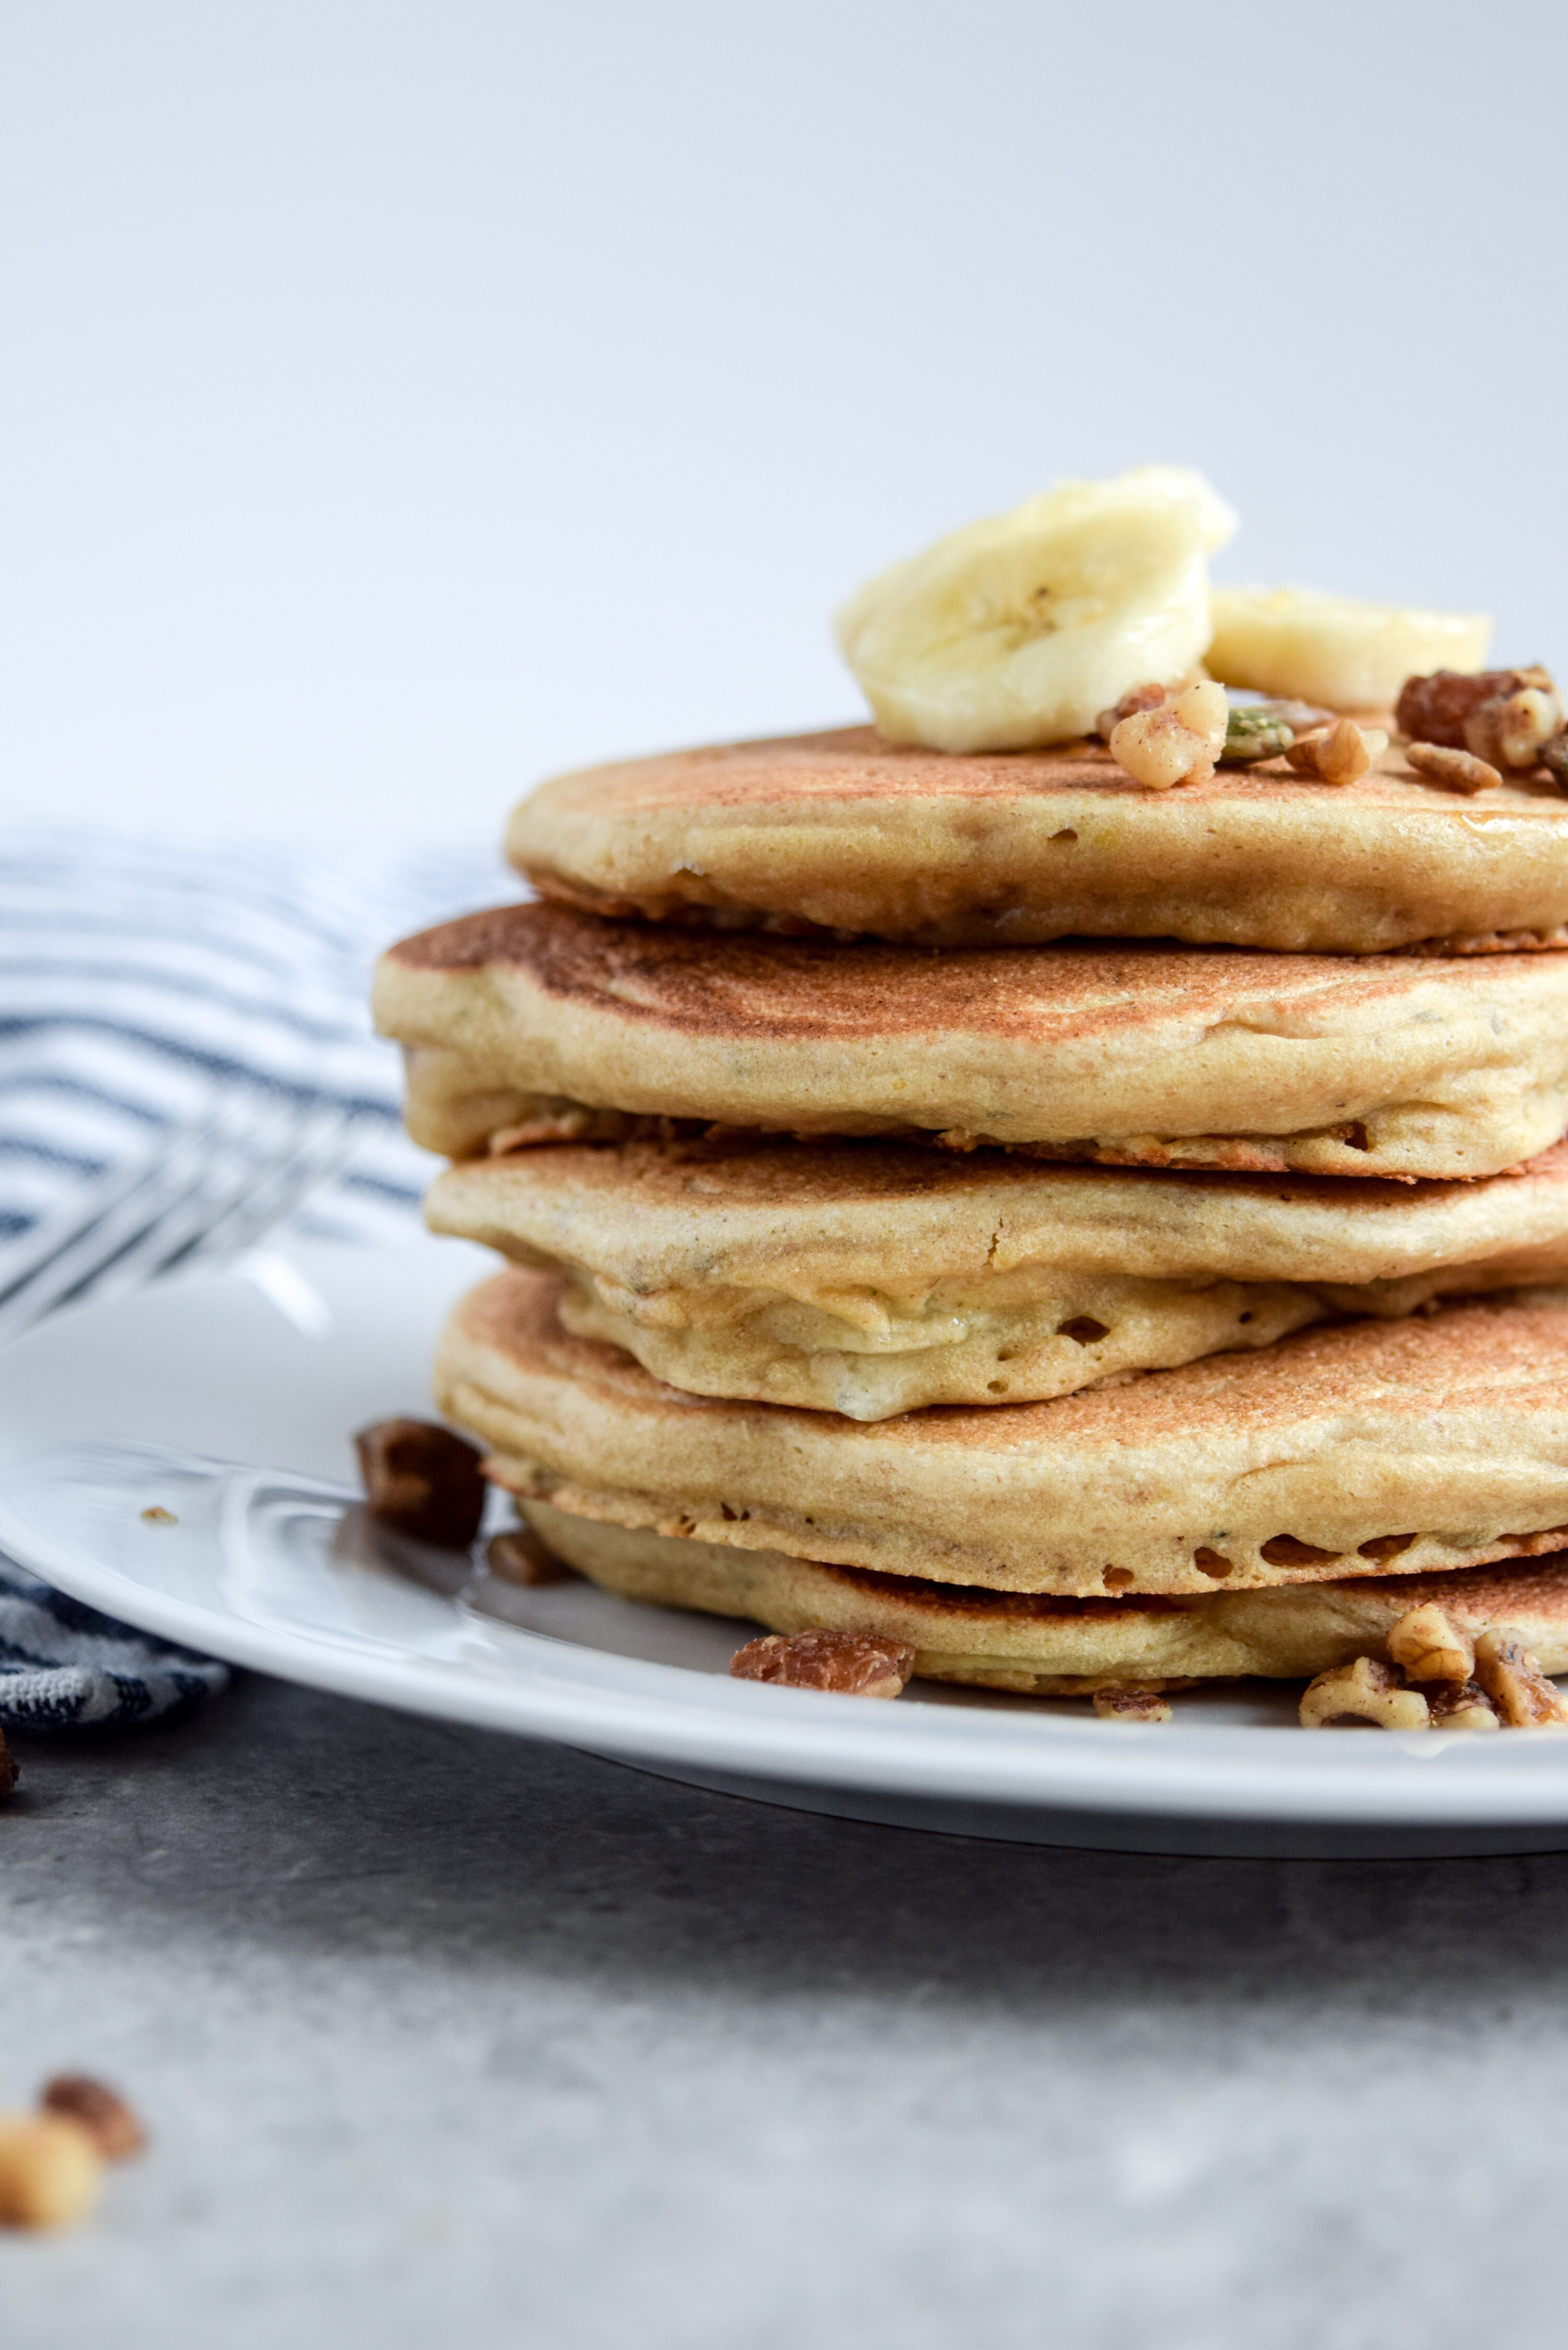 Easy Banana Granola Multigrain Pancakes